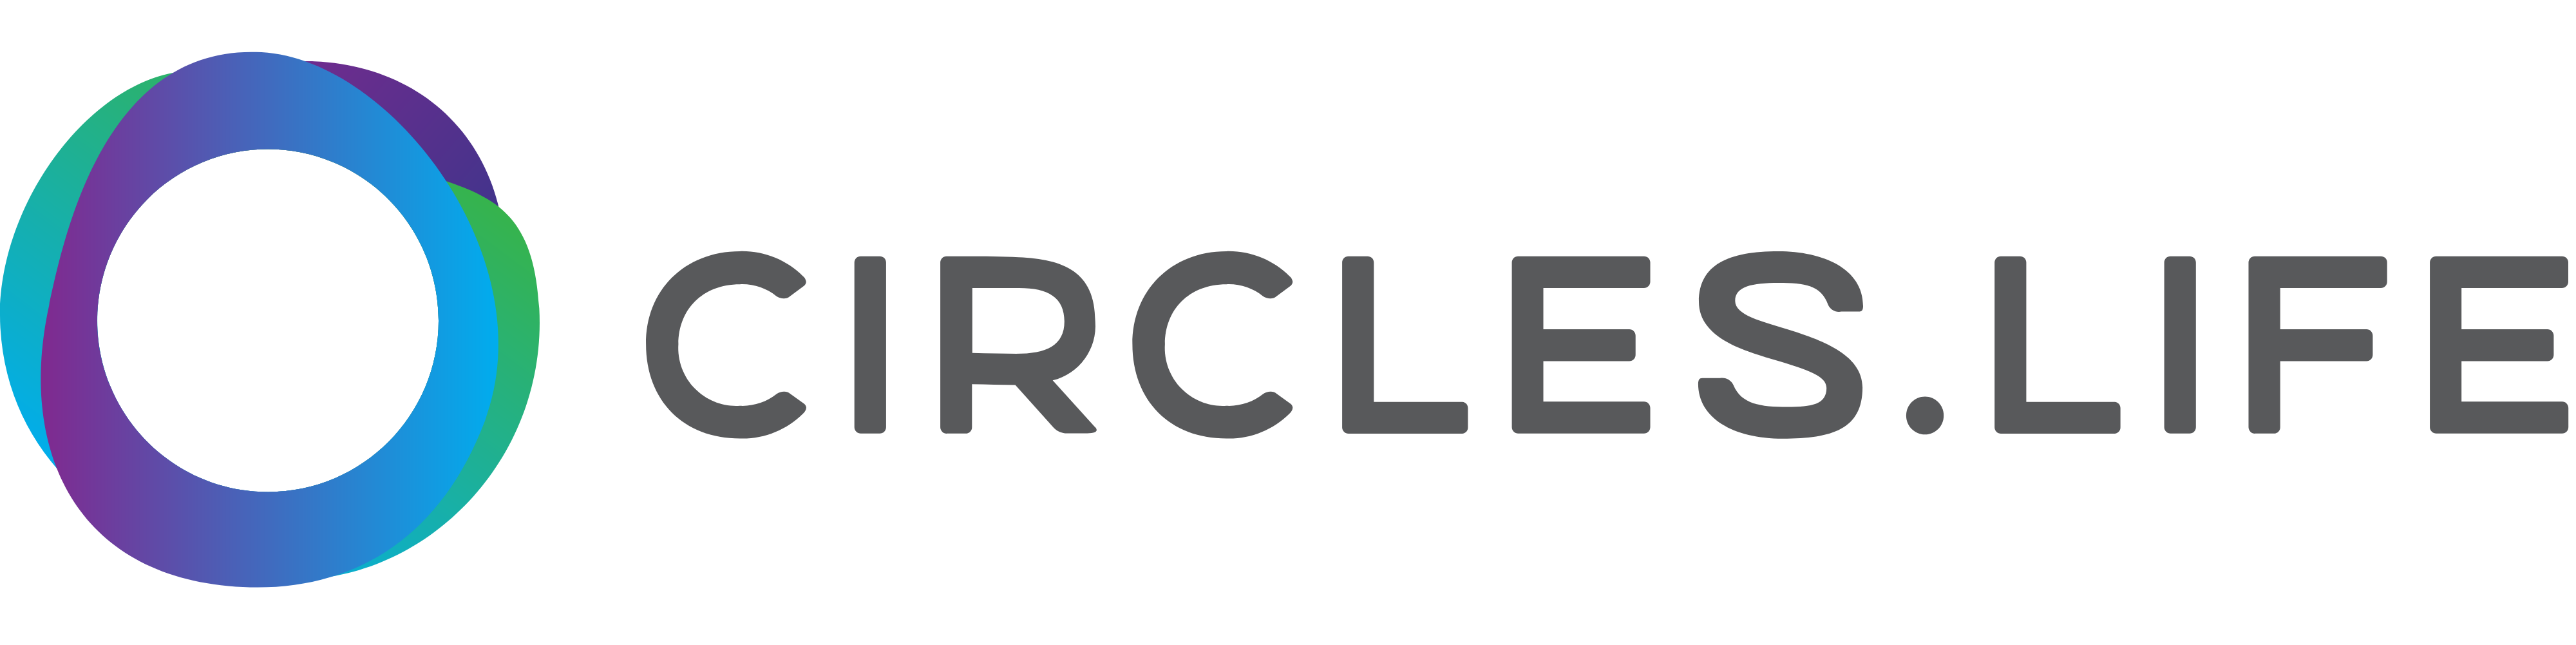 circles-life-logo.png